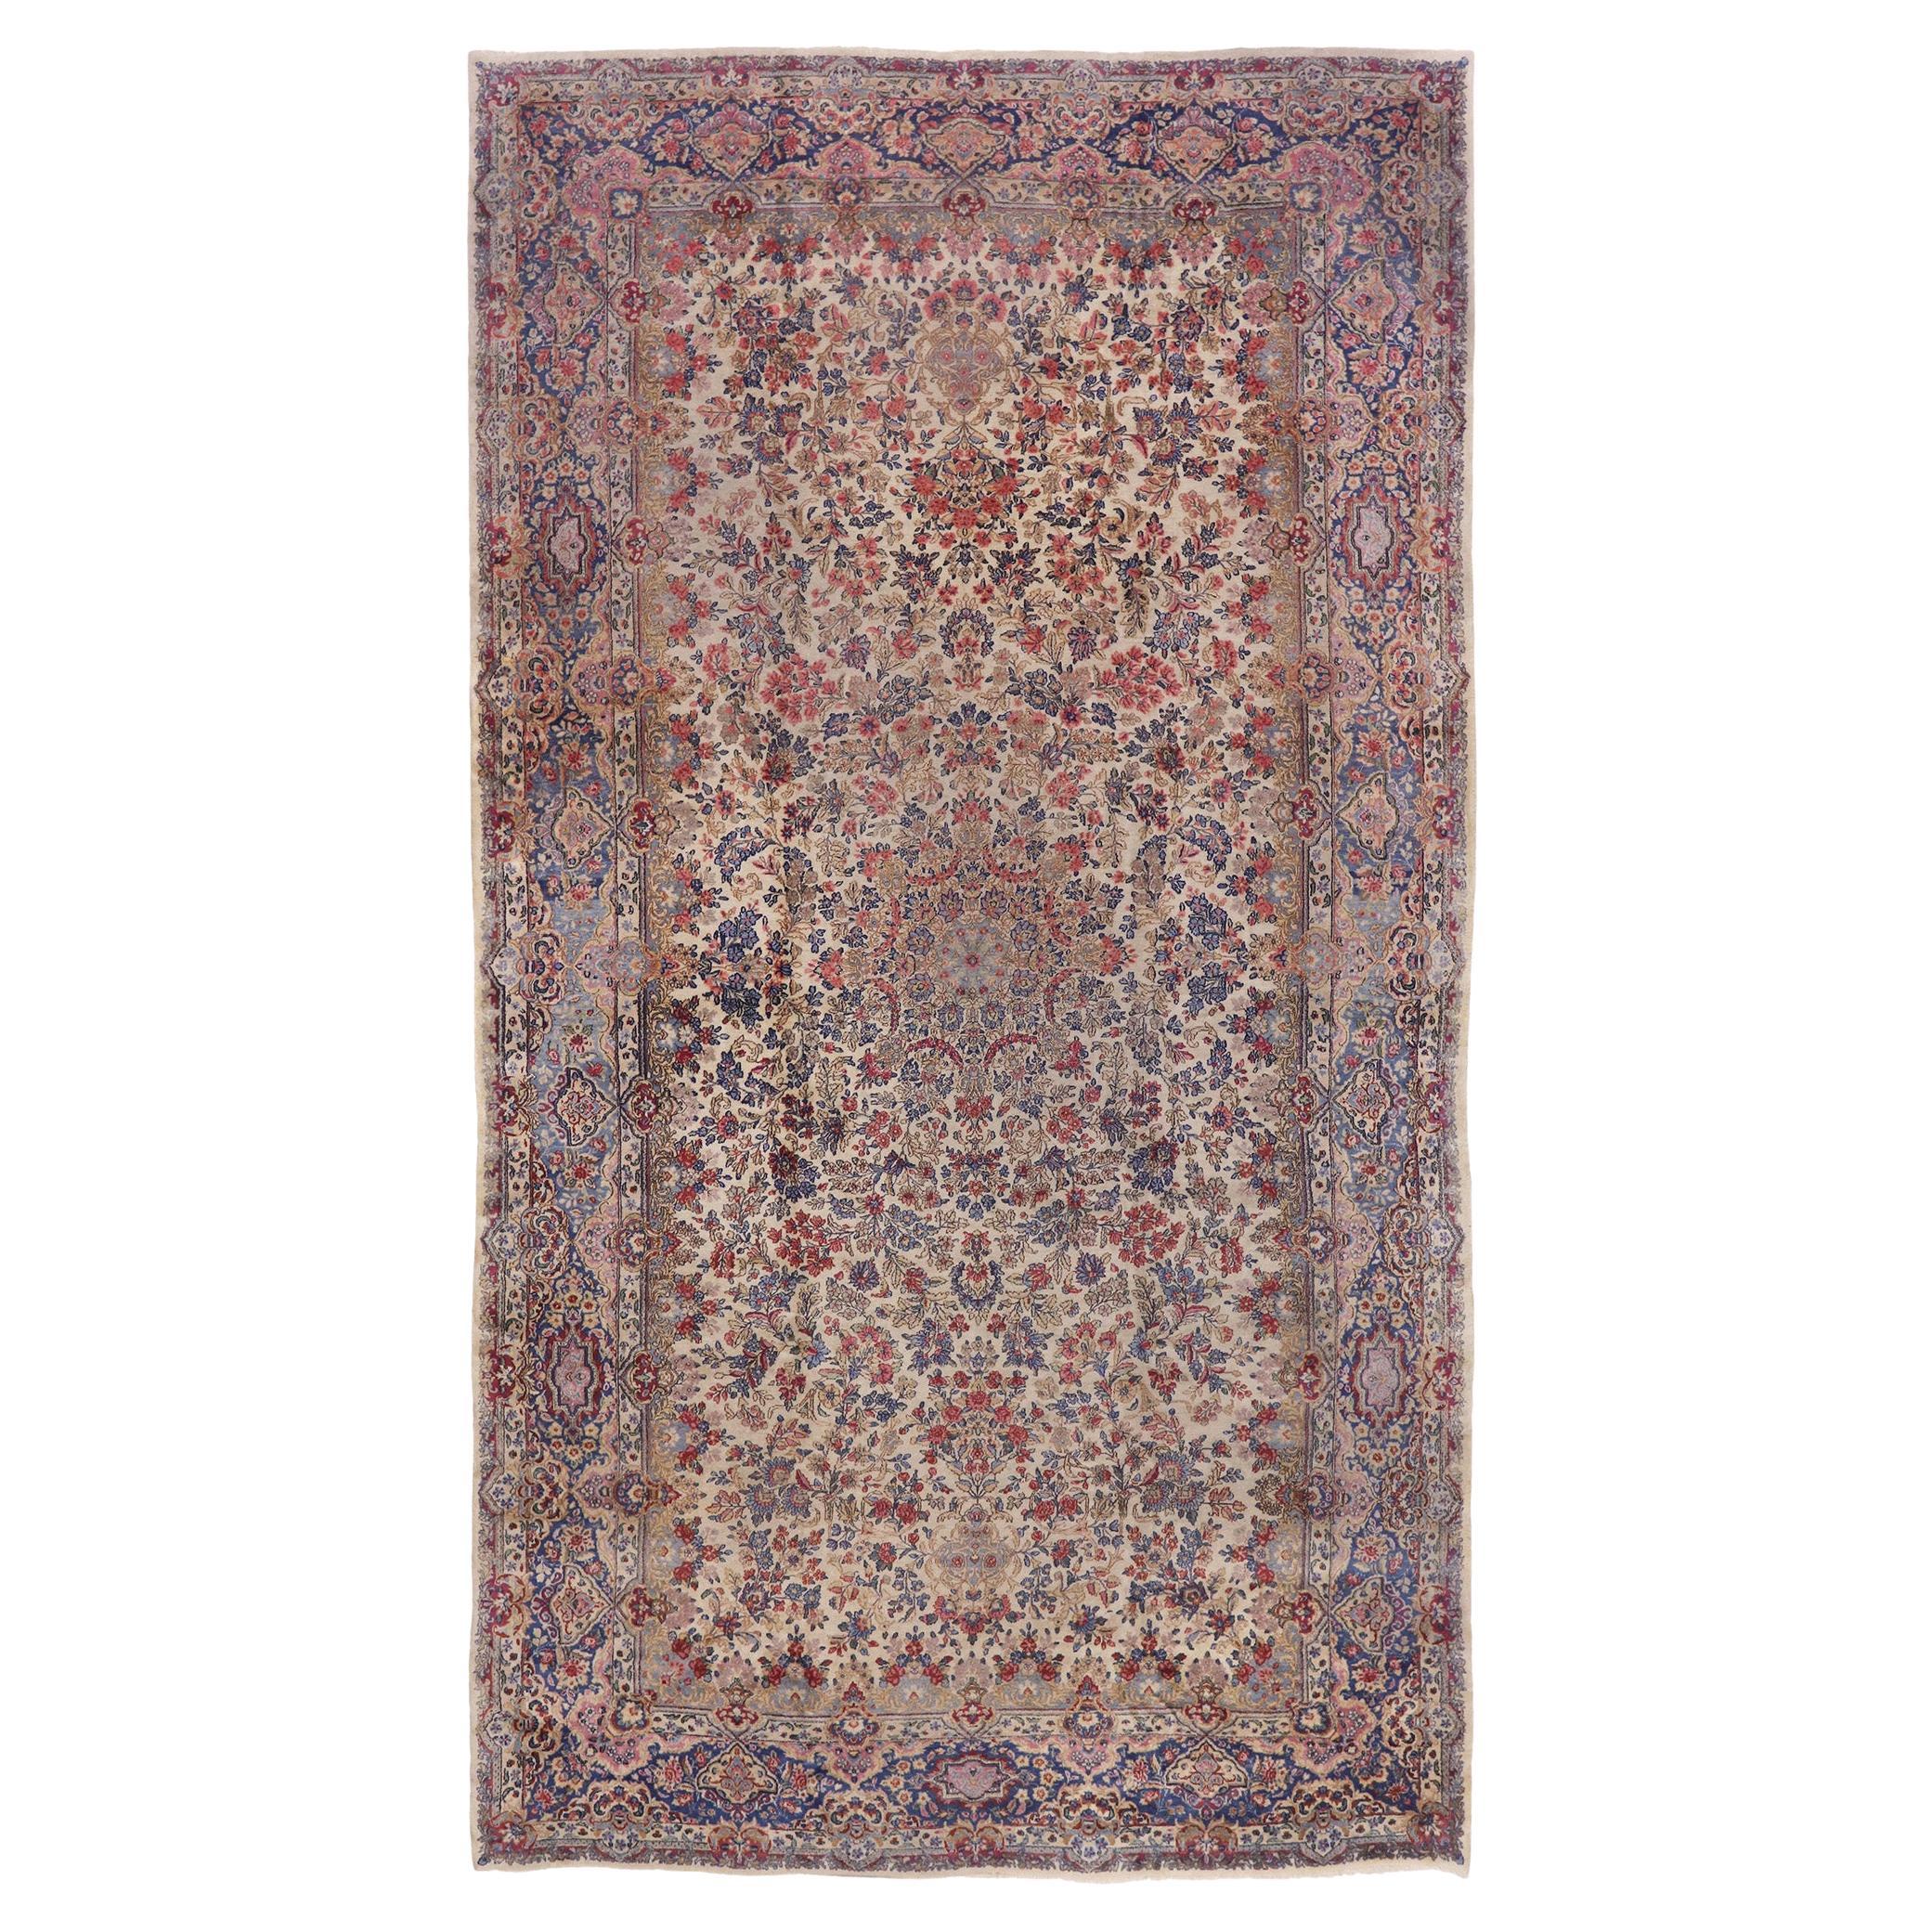 Antique Persian Kerman Rug, 09'07 x 17'06